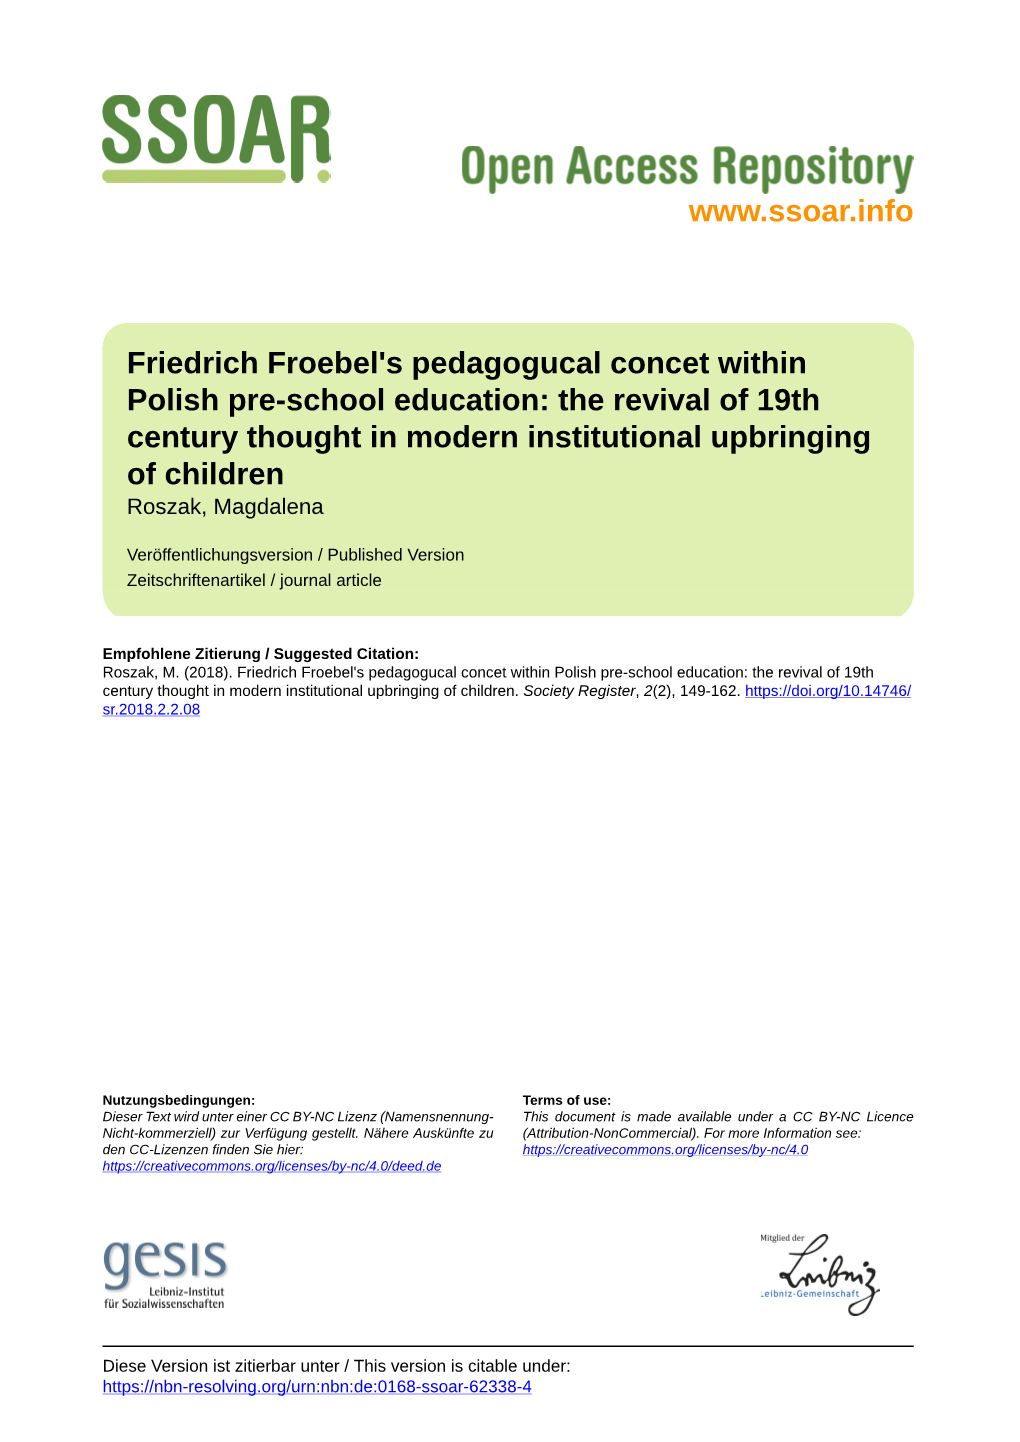 Friedrich Froebel's Pedagogucal Concet Within Polish Pre-School Education